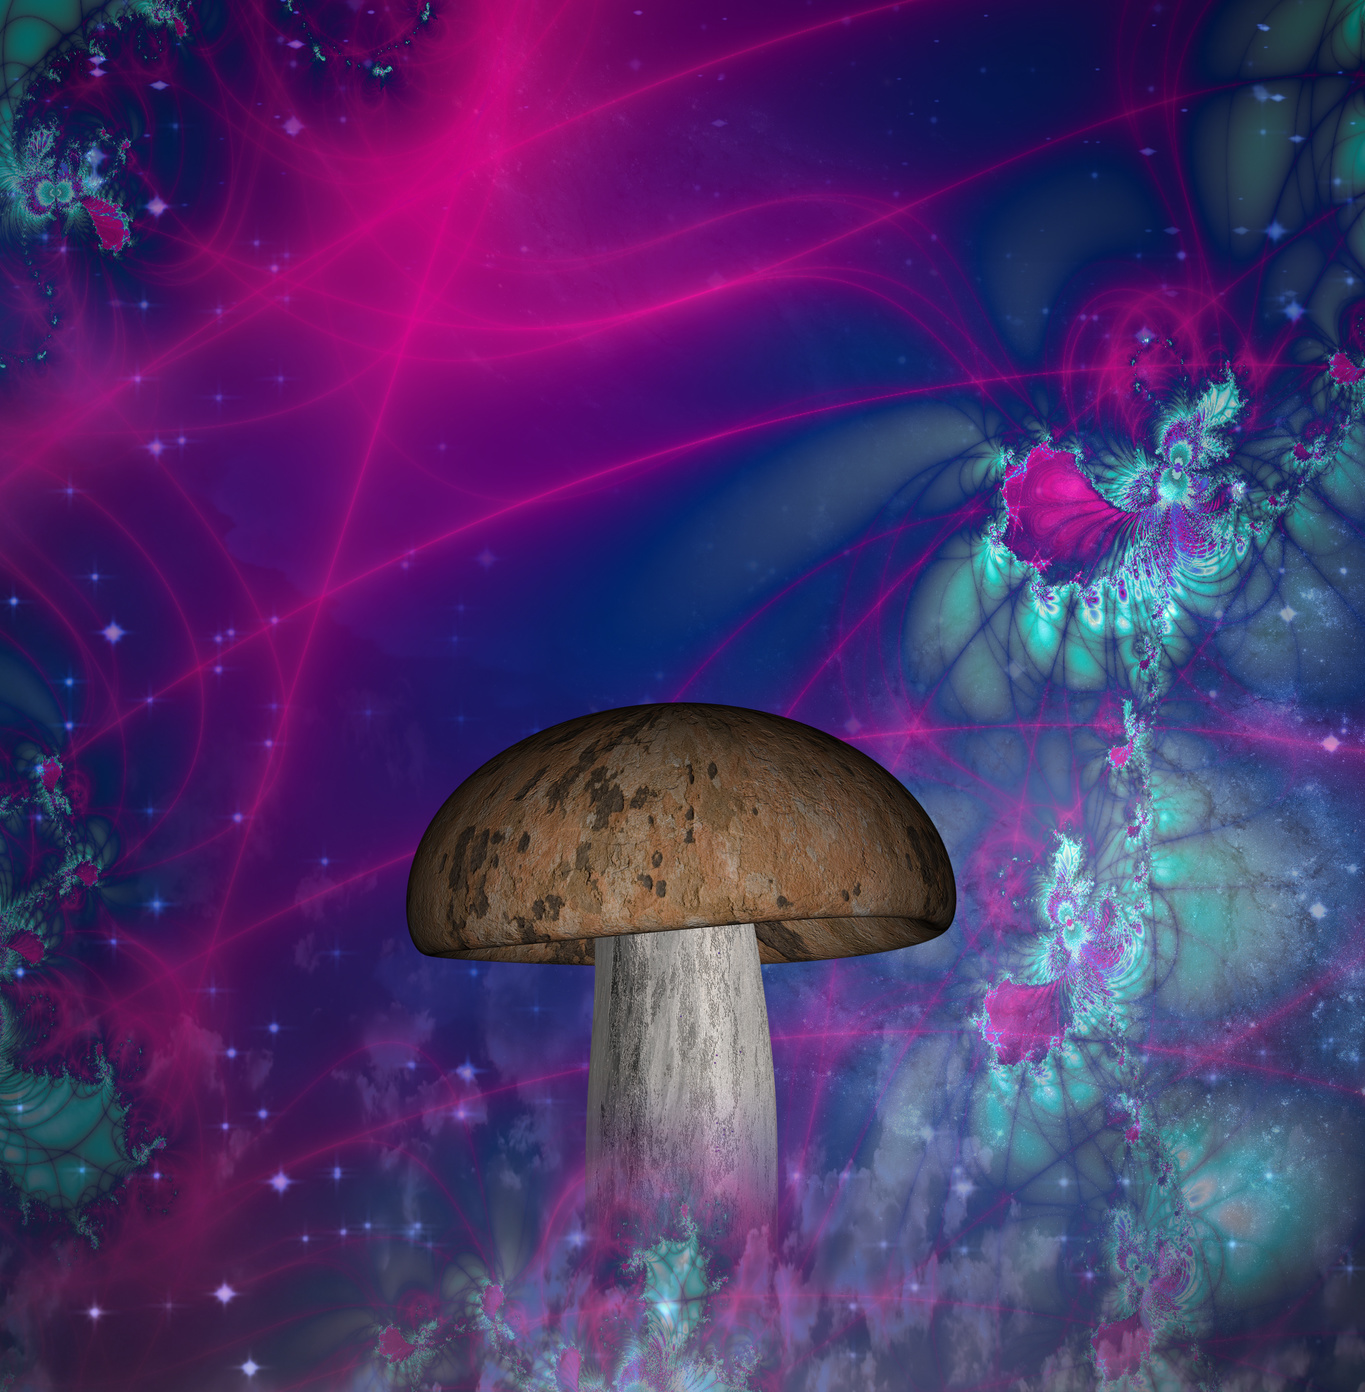 A Trippy Mushroom Poster